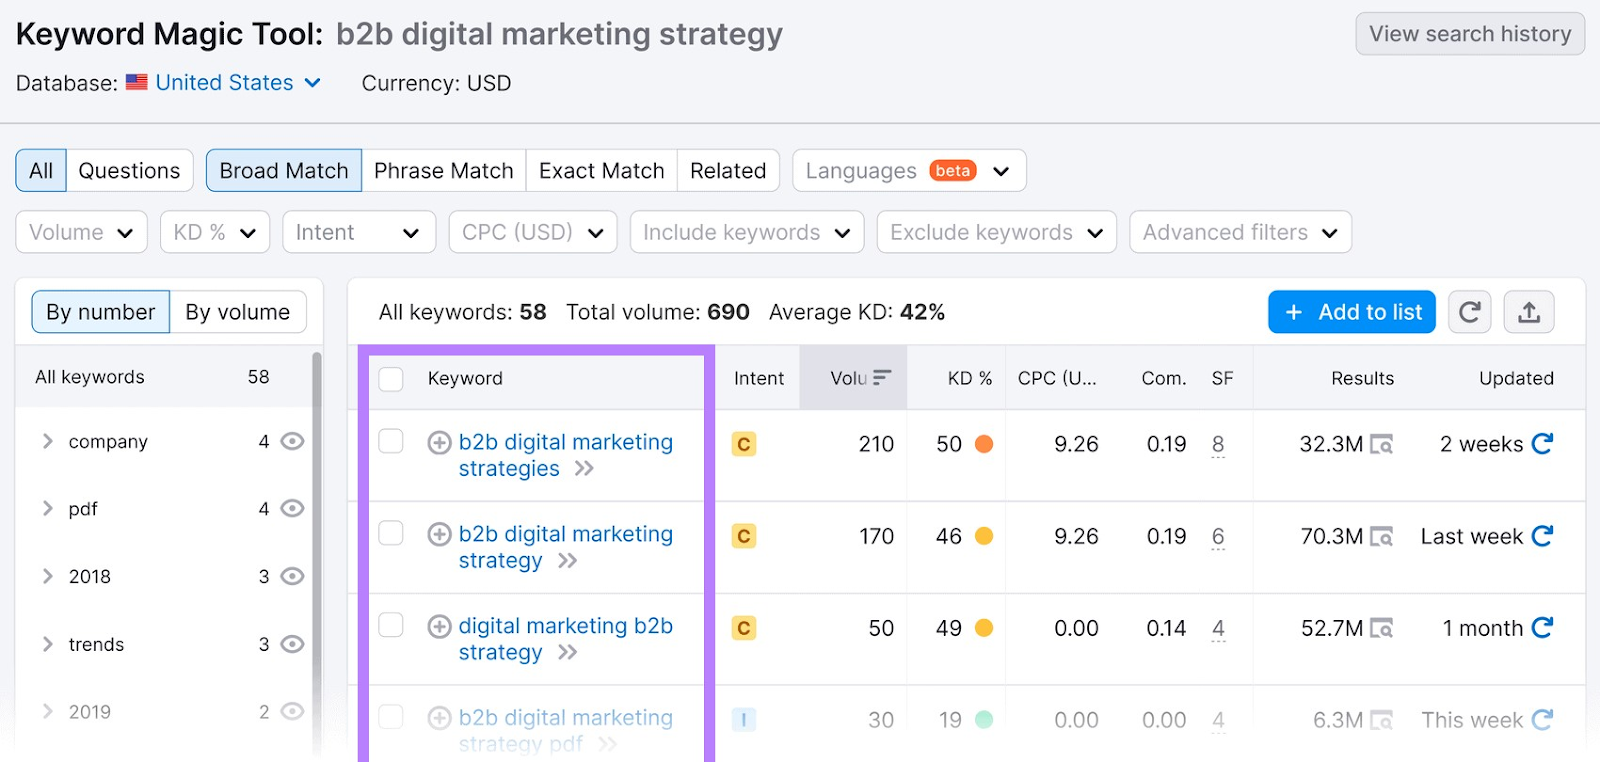 Keyword Magic Tool results for “b2b digital marketing strategy”